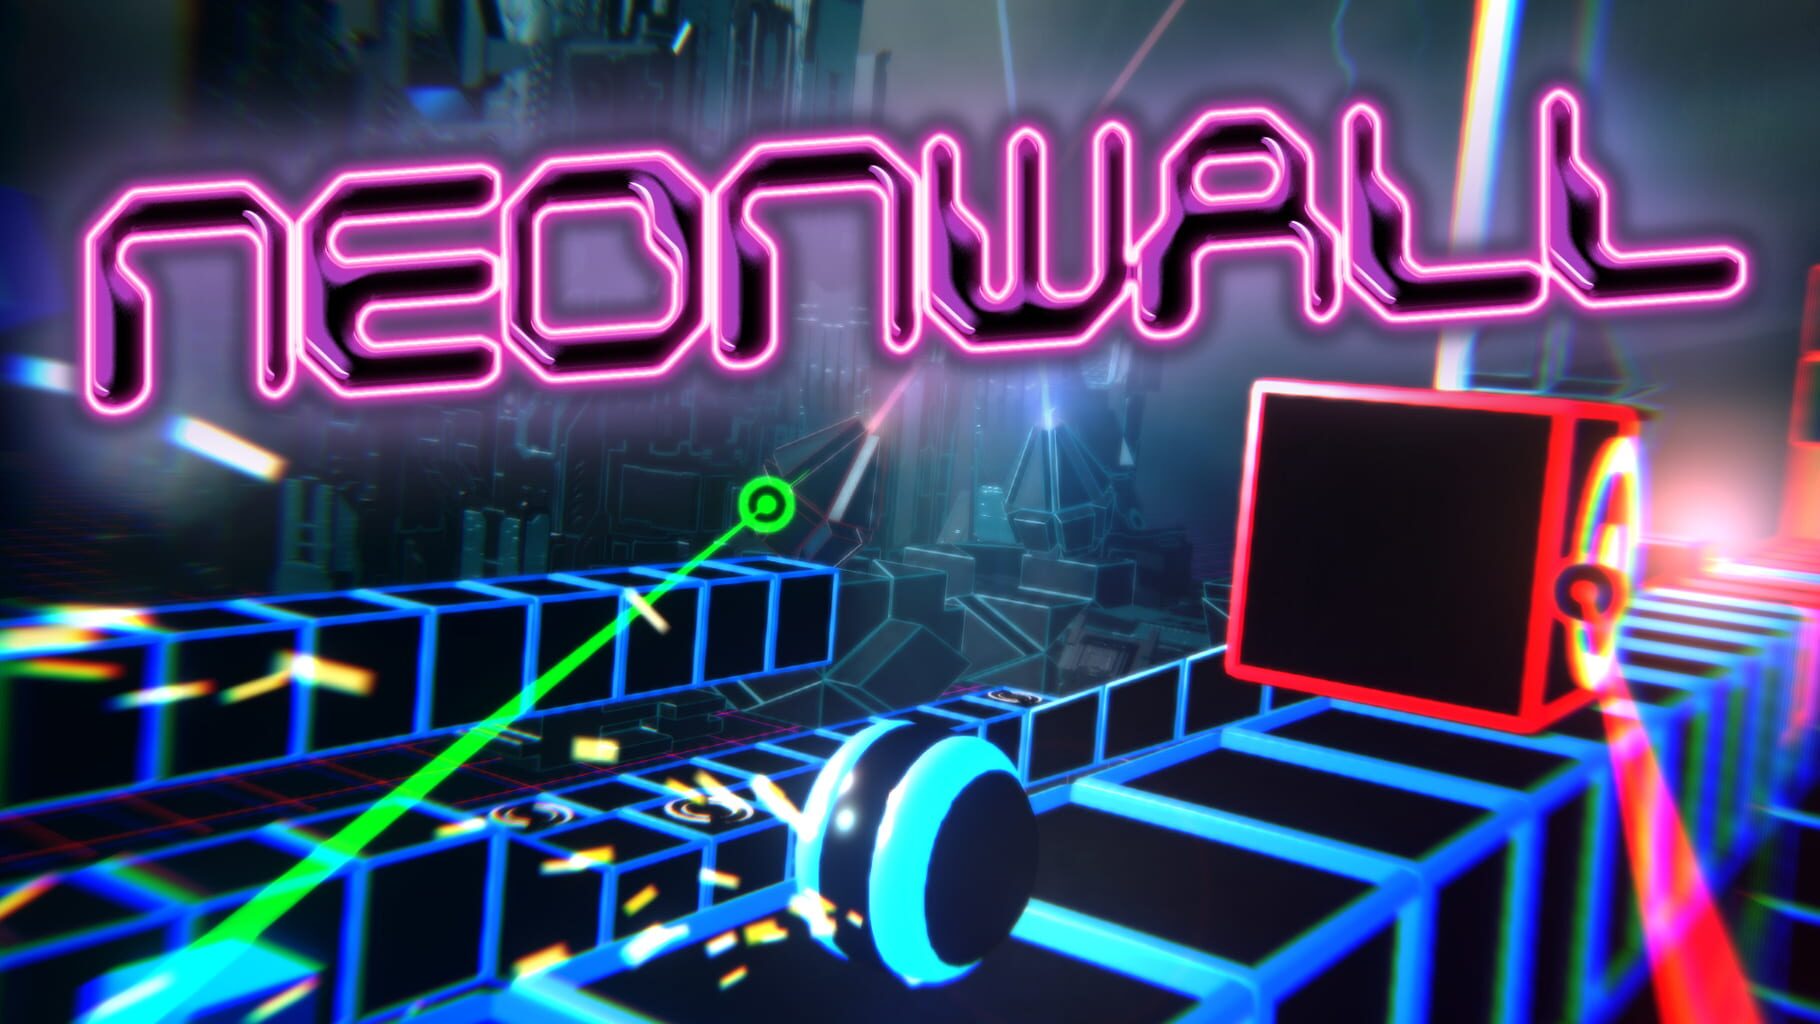 Neonwall artwork